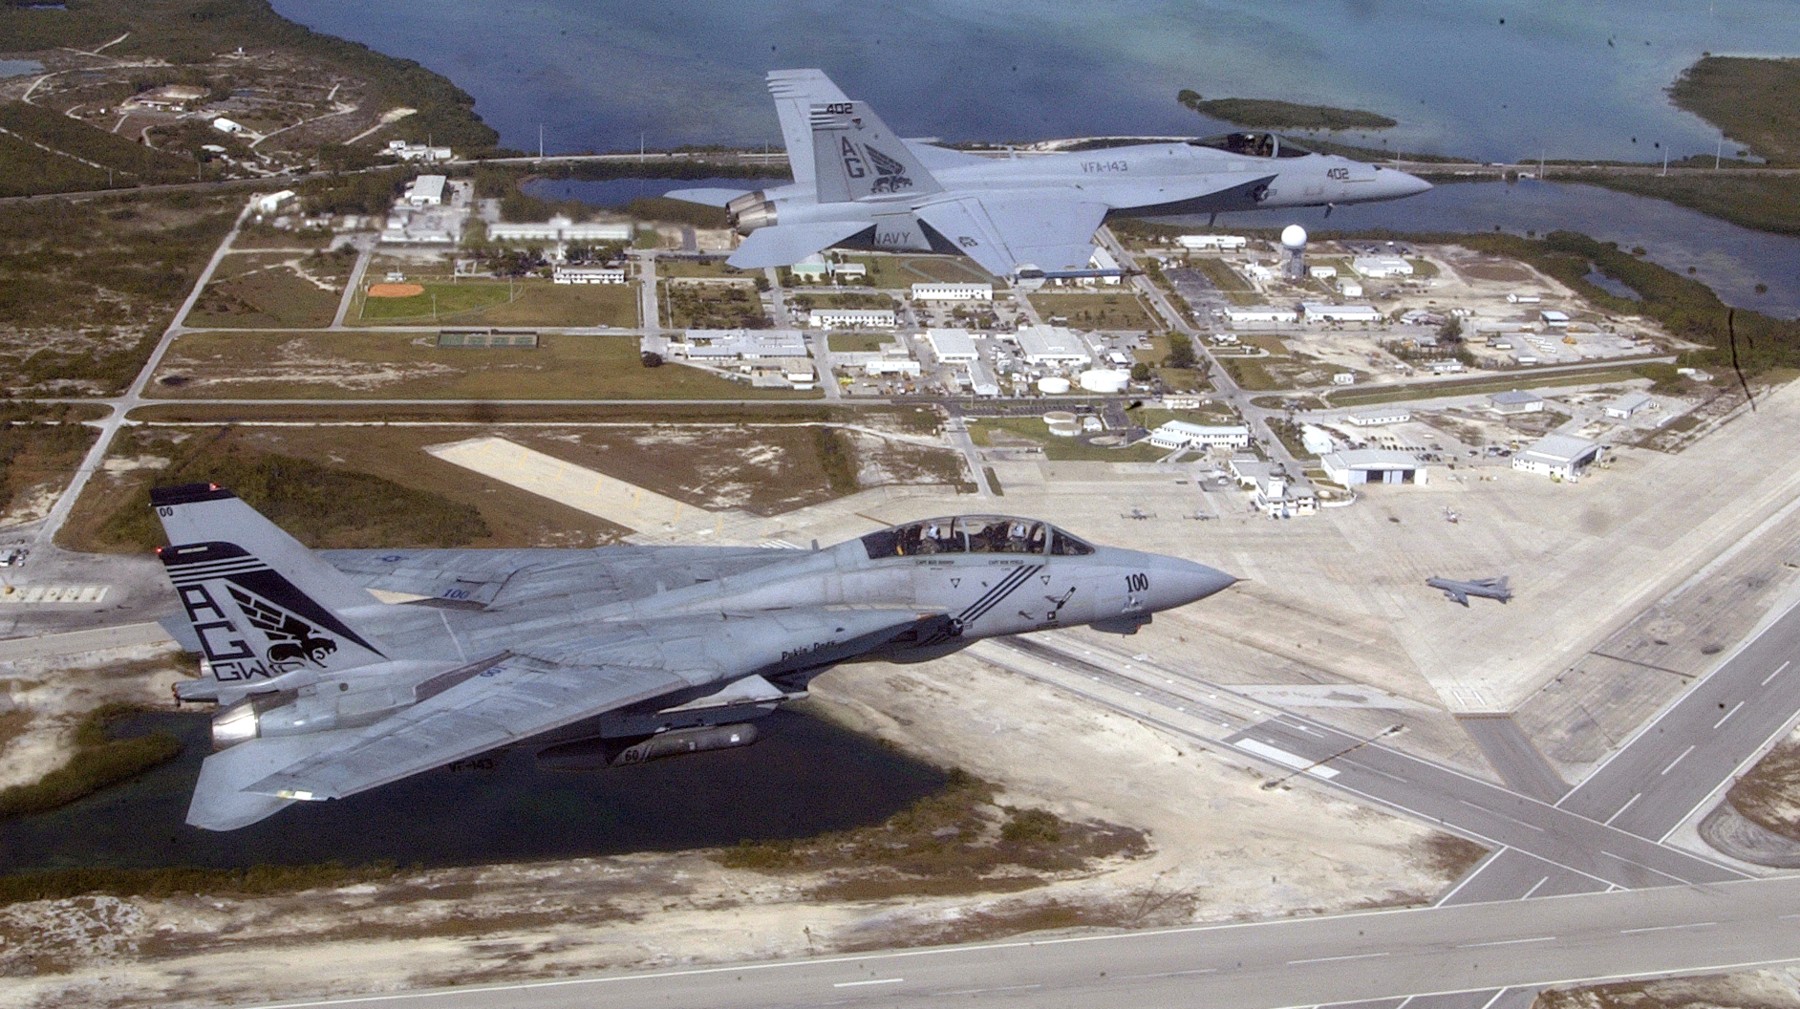 vfa-143 pukin dogs strike fighter squadron f/a-18e super hornet f-14b tomcat vf-143 key west florida 2005 73